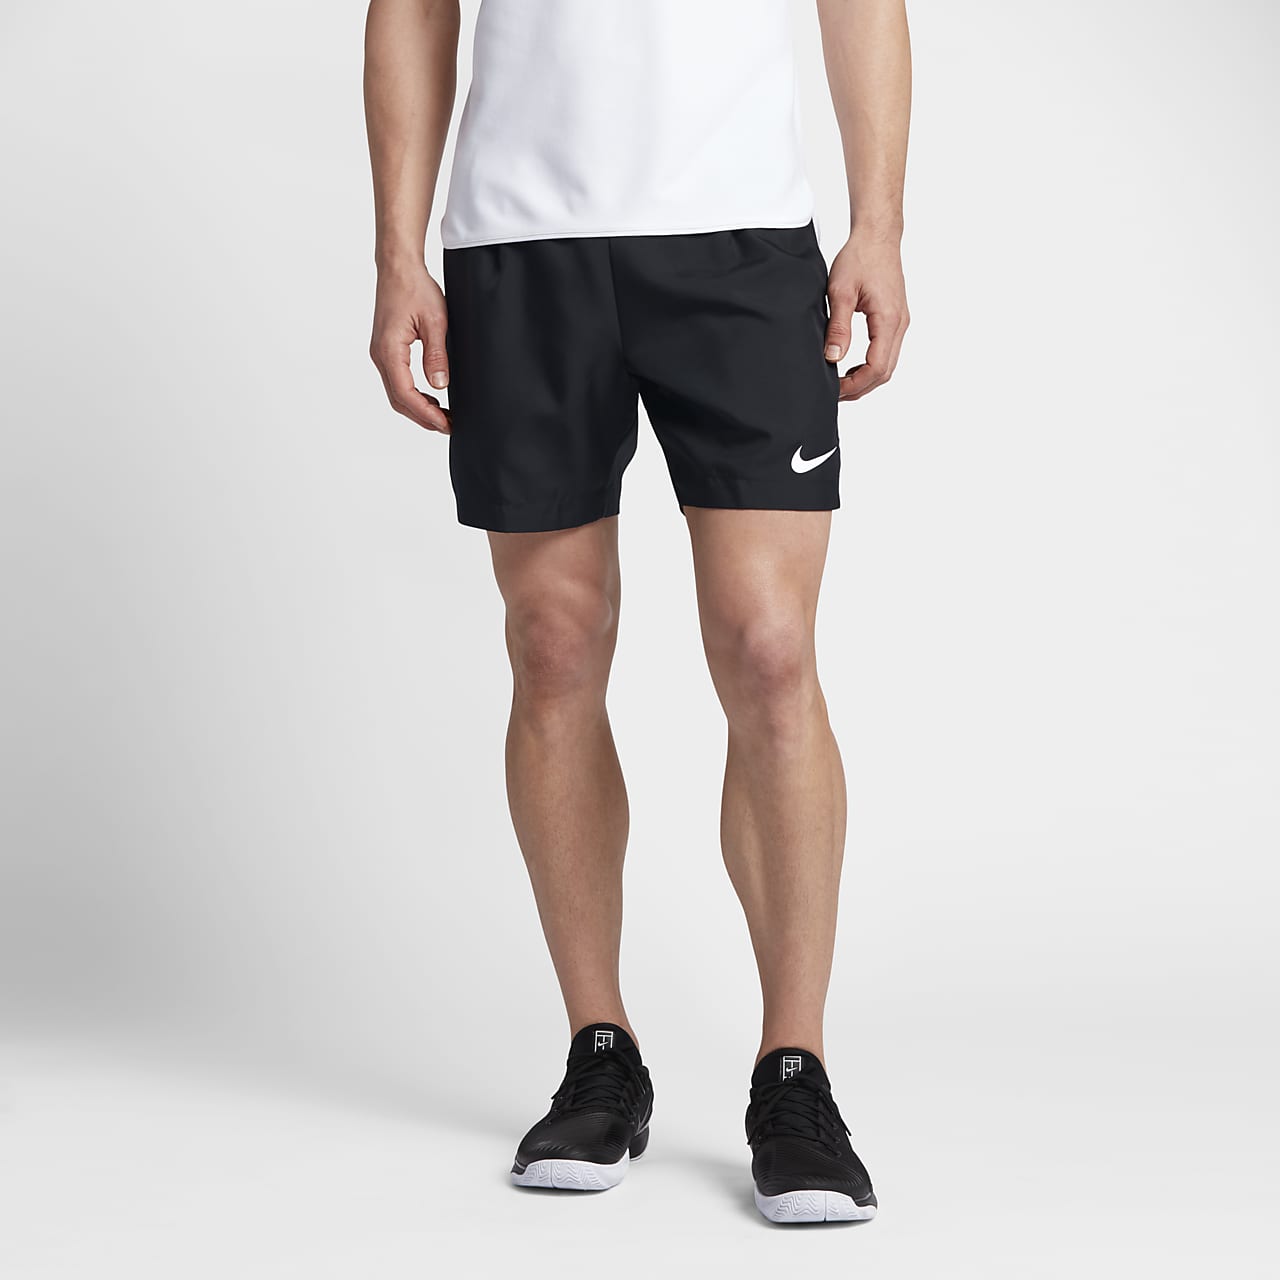 18cm approx.) Tennis Shorts. Nike ID